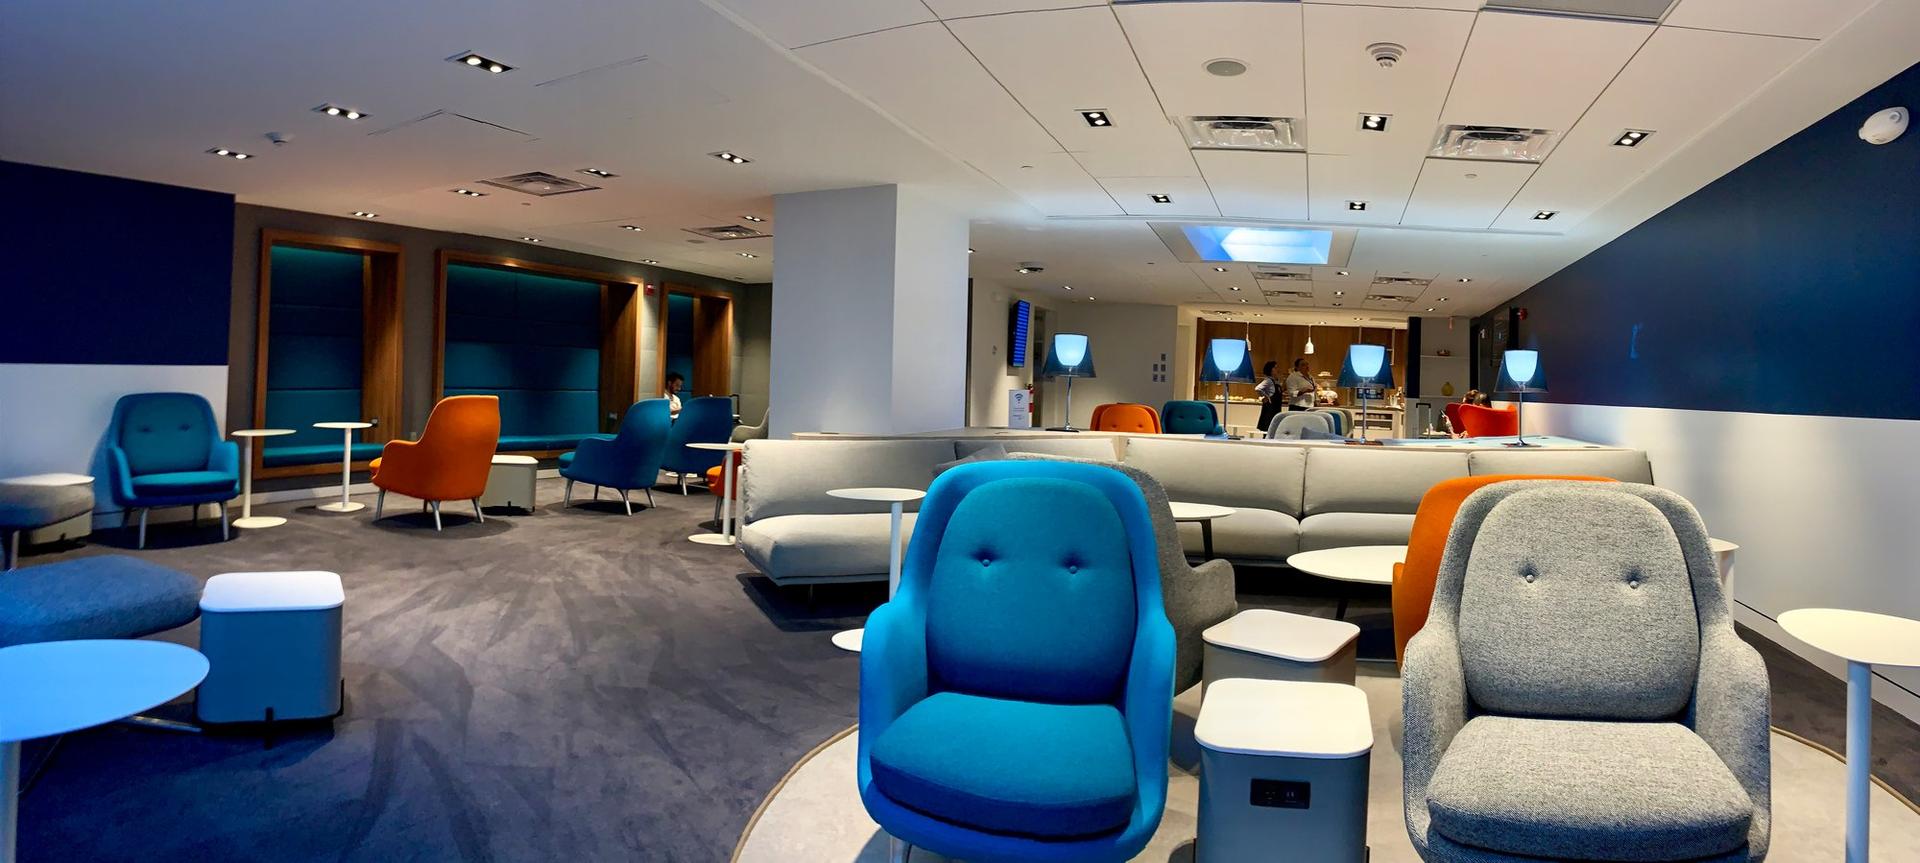 Air France/KLM Lounge image 9 of 21